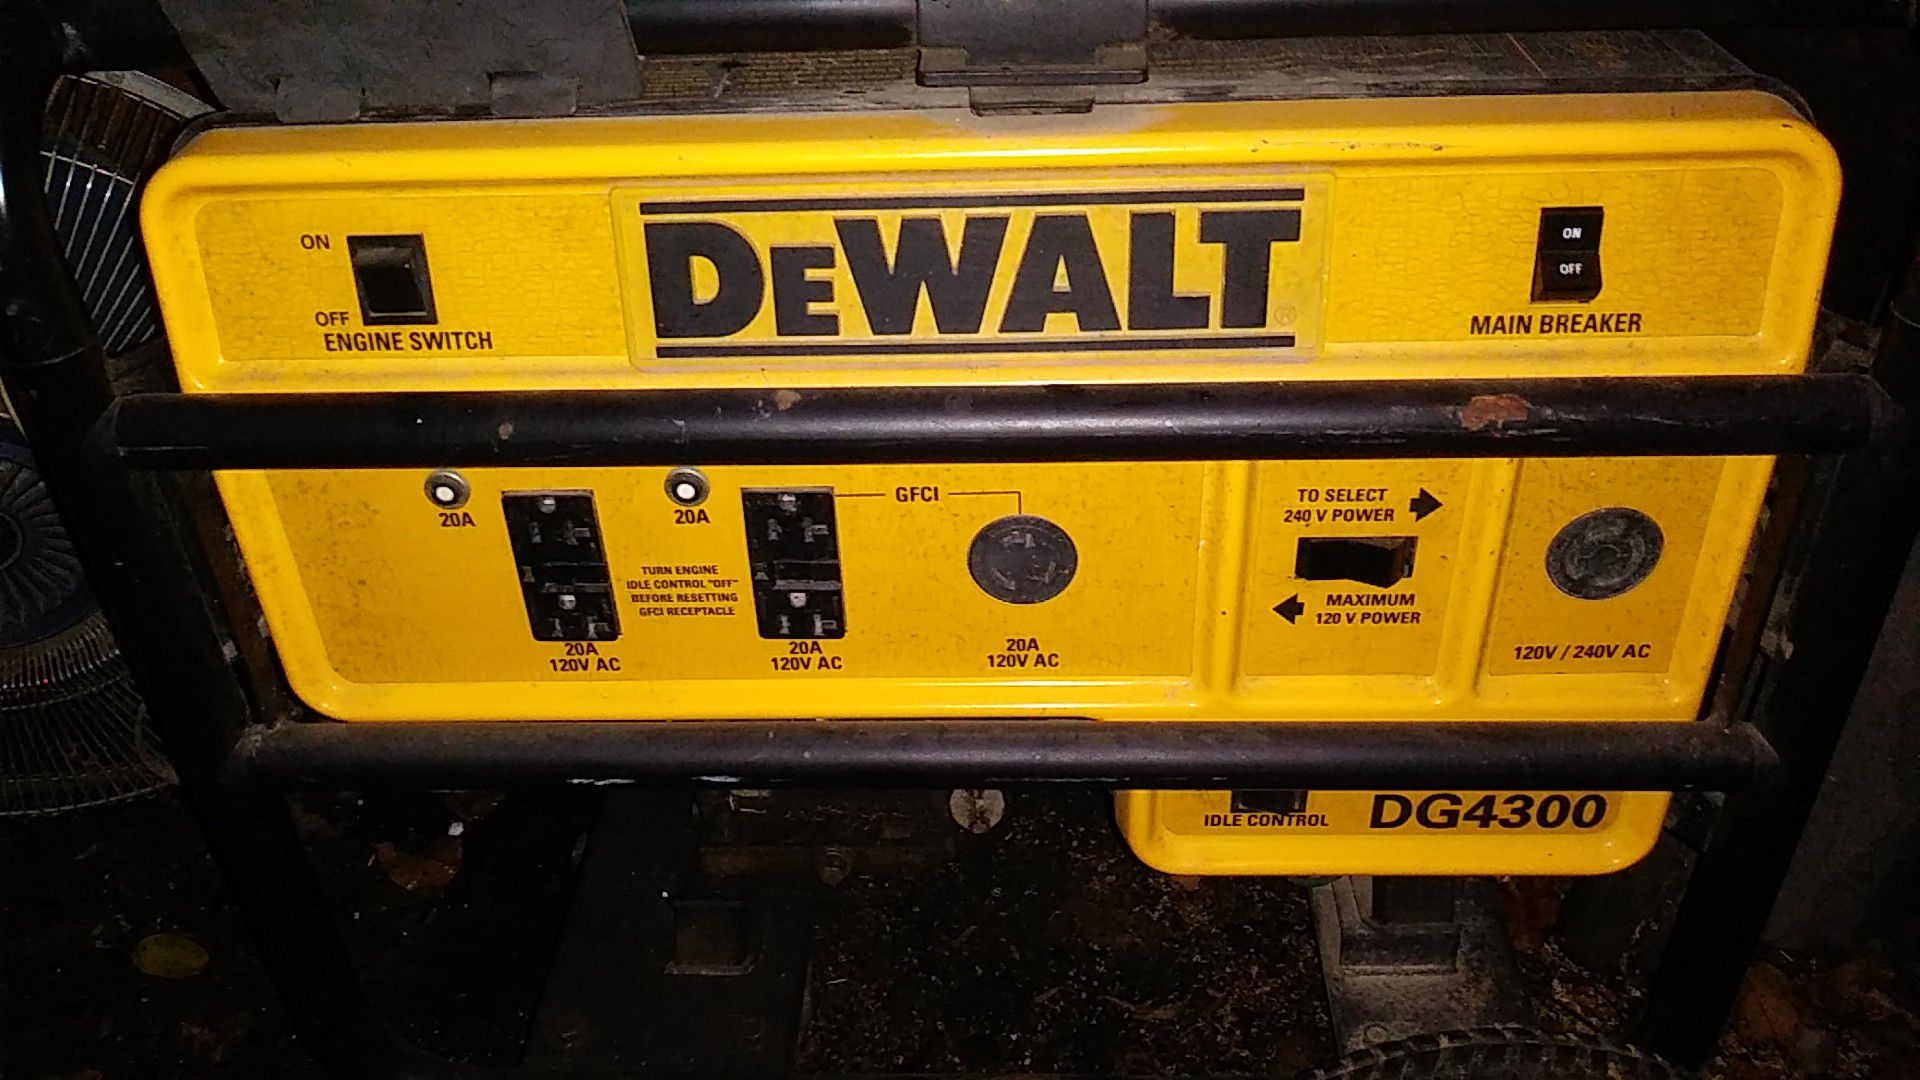 Dewalt 3500 watt generator with Honda motor, VGC.